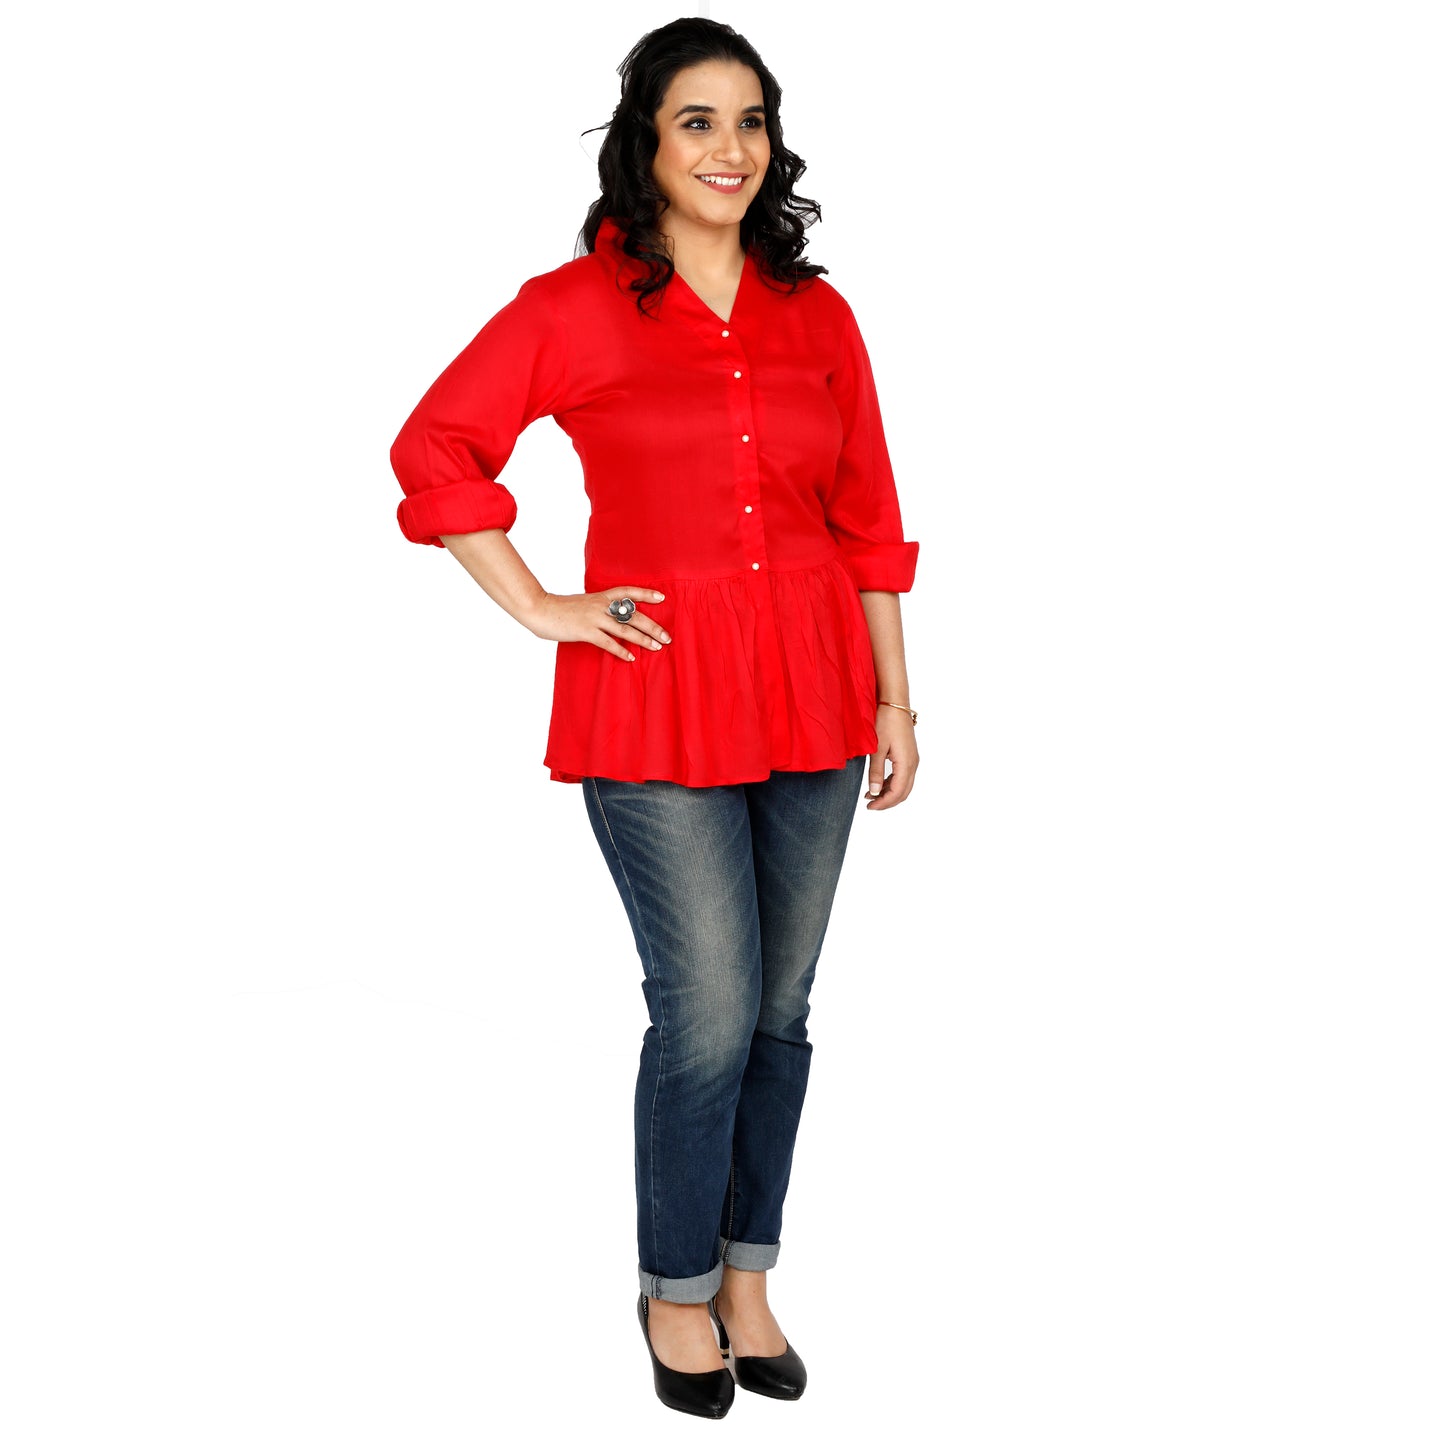 Lady in Red Peplum Shirt